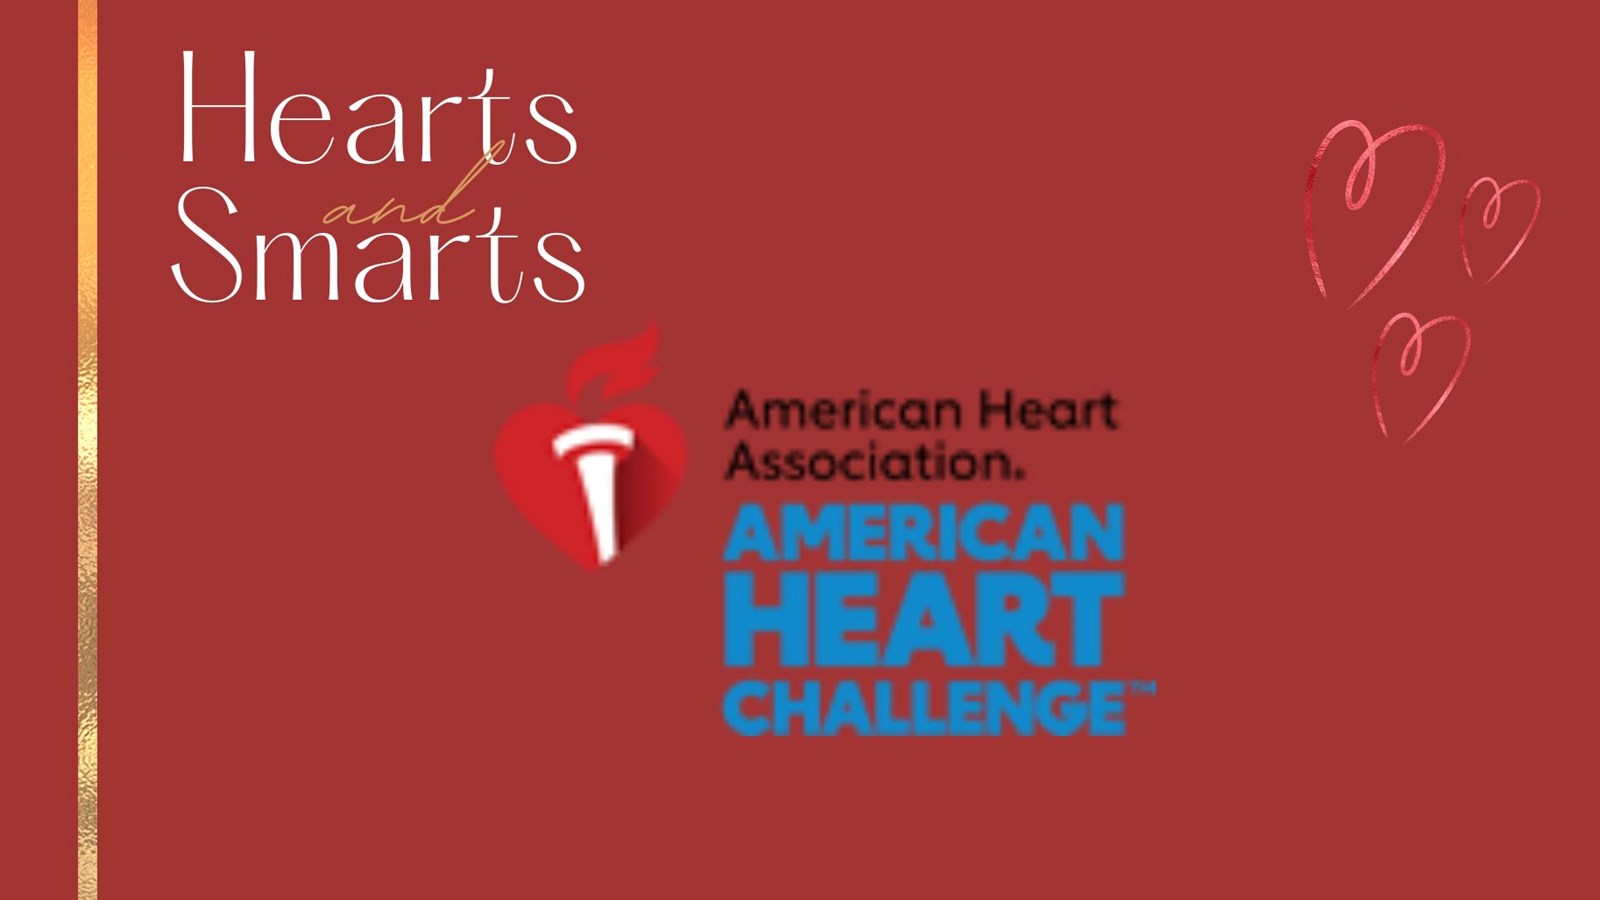 American Heart Challenge